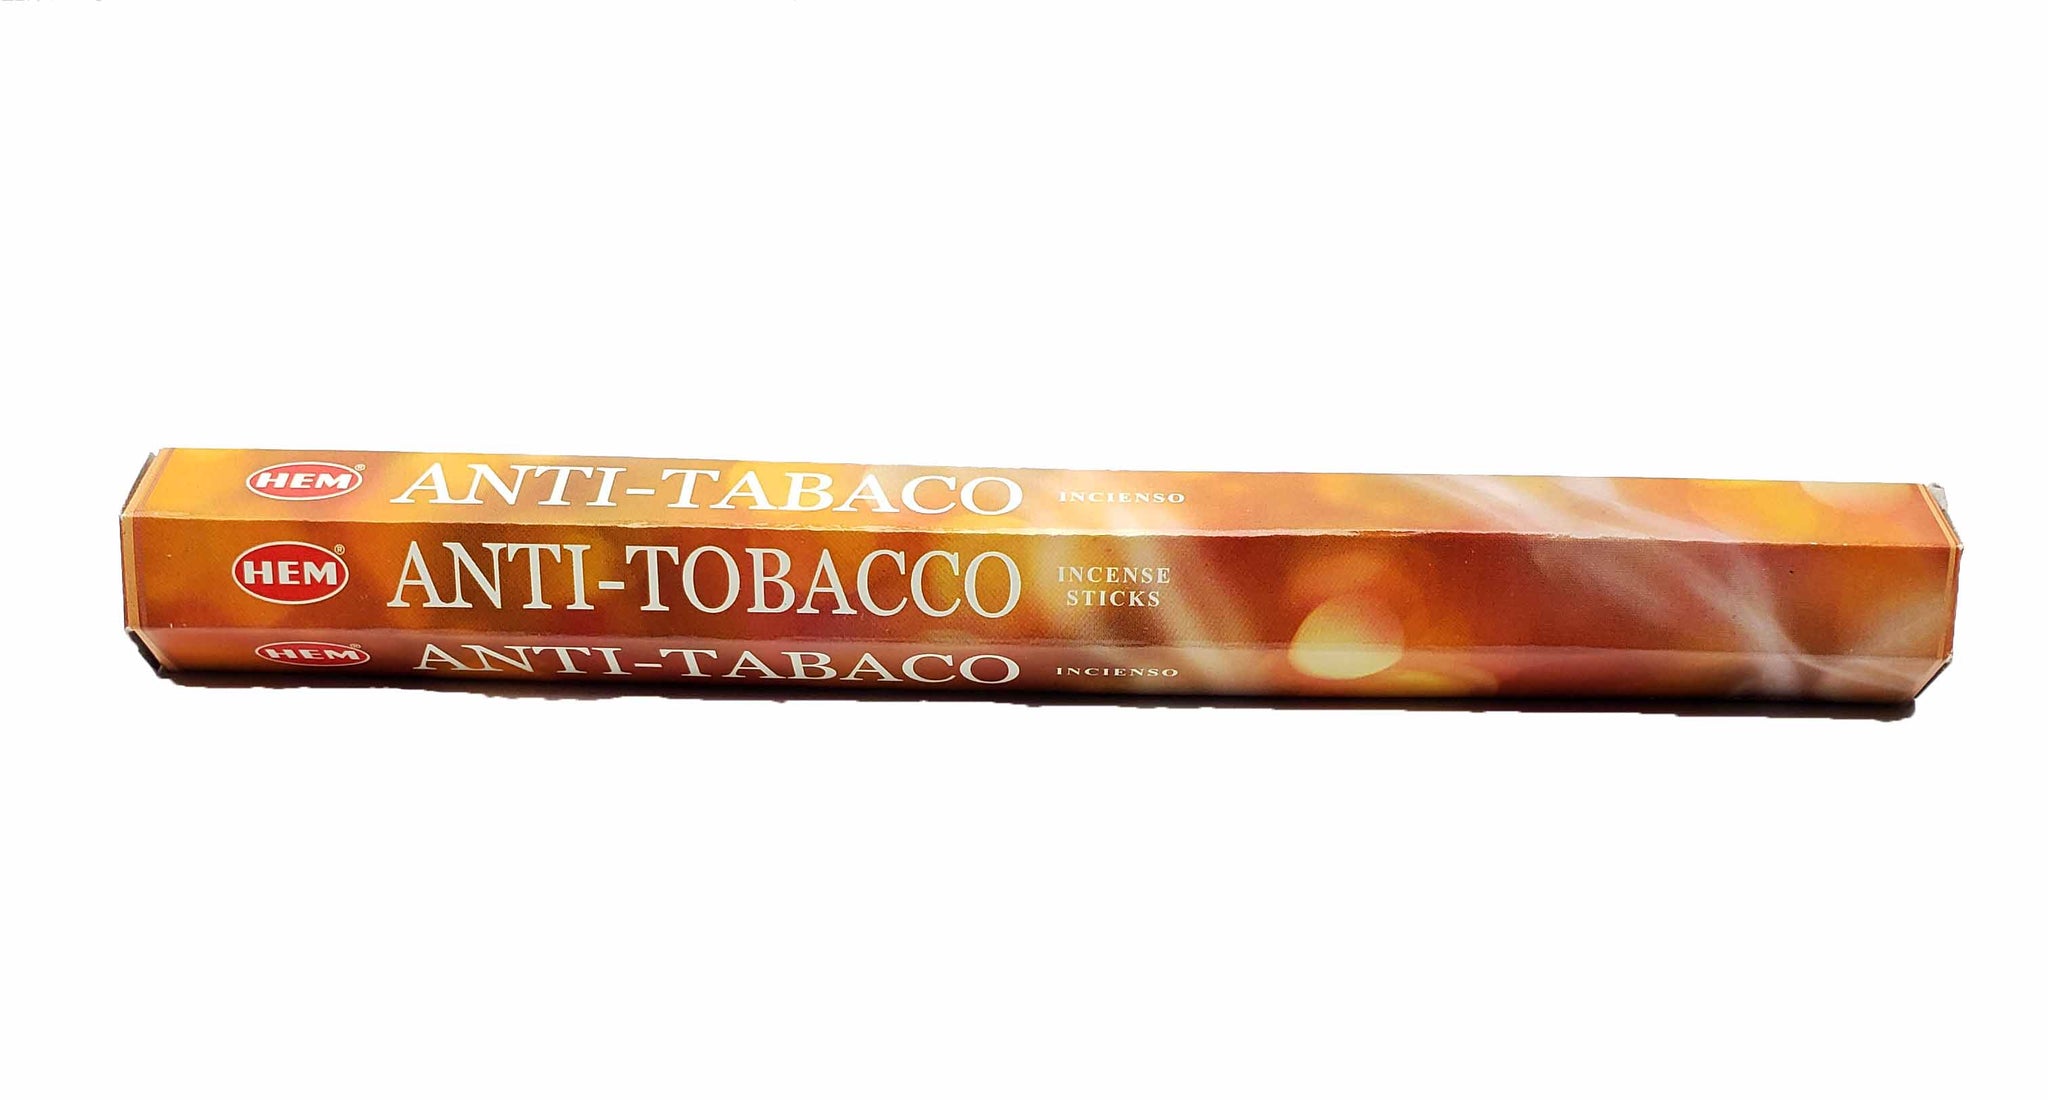 Anti-Tobacco Incense Sticks